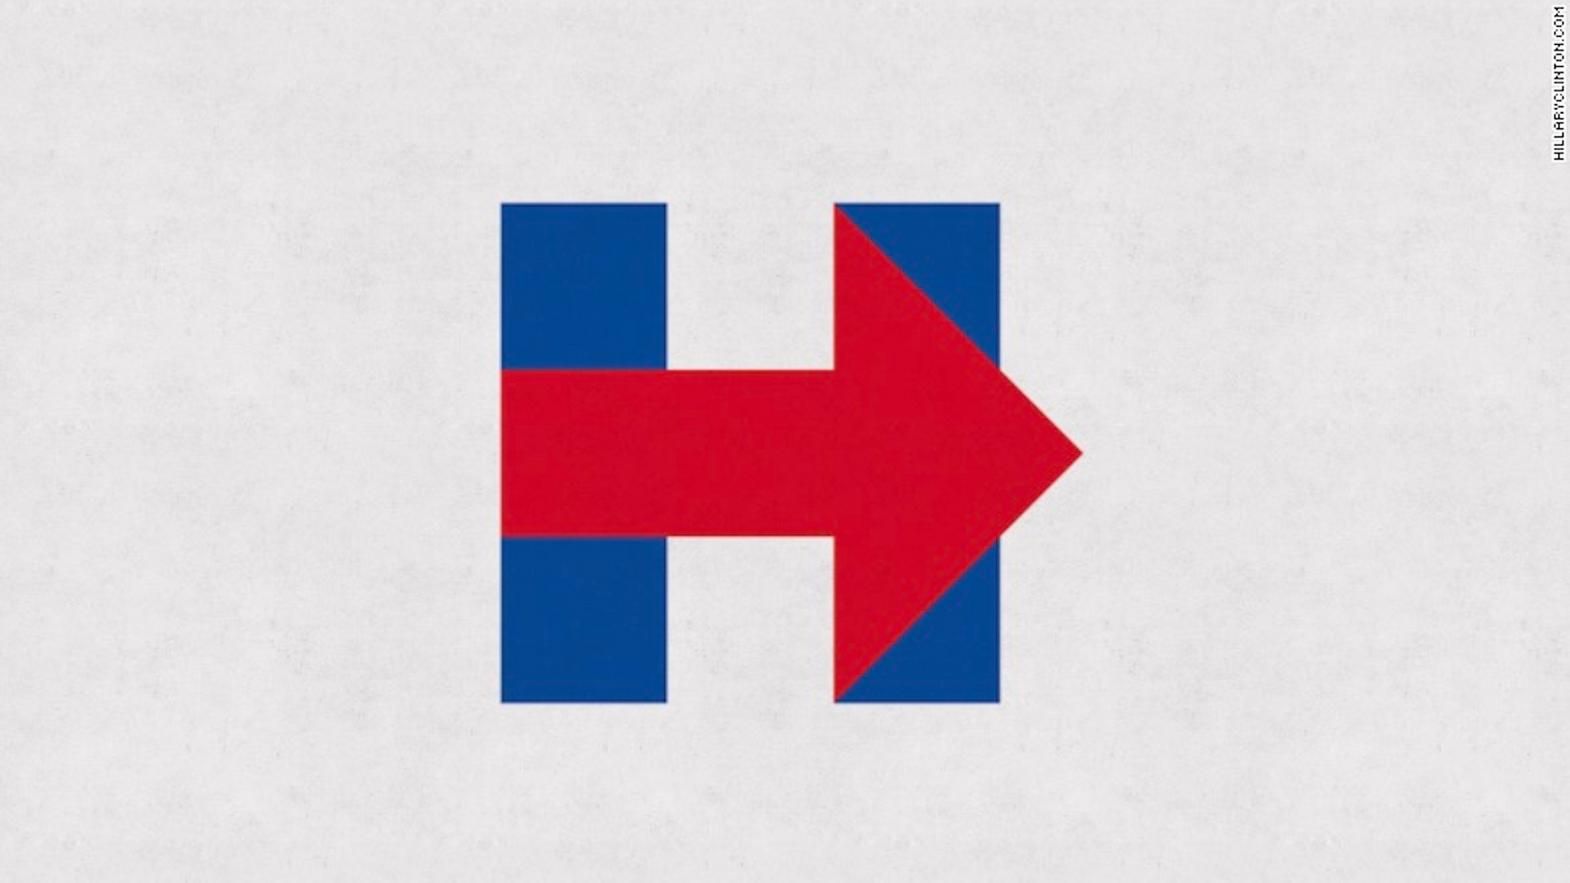 Hillary Clintons logo